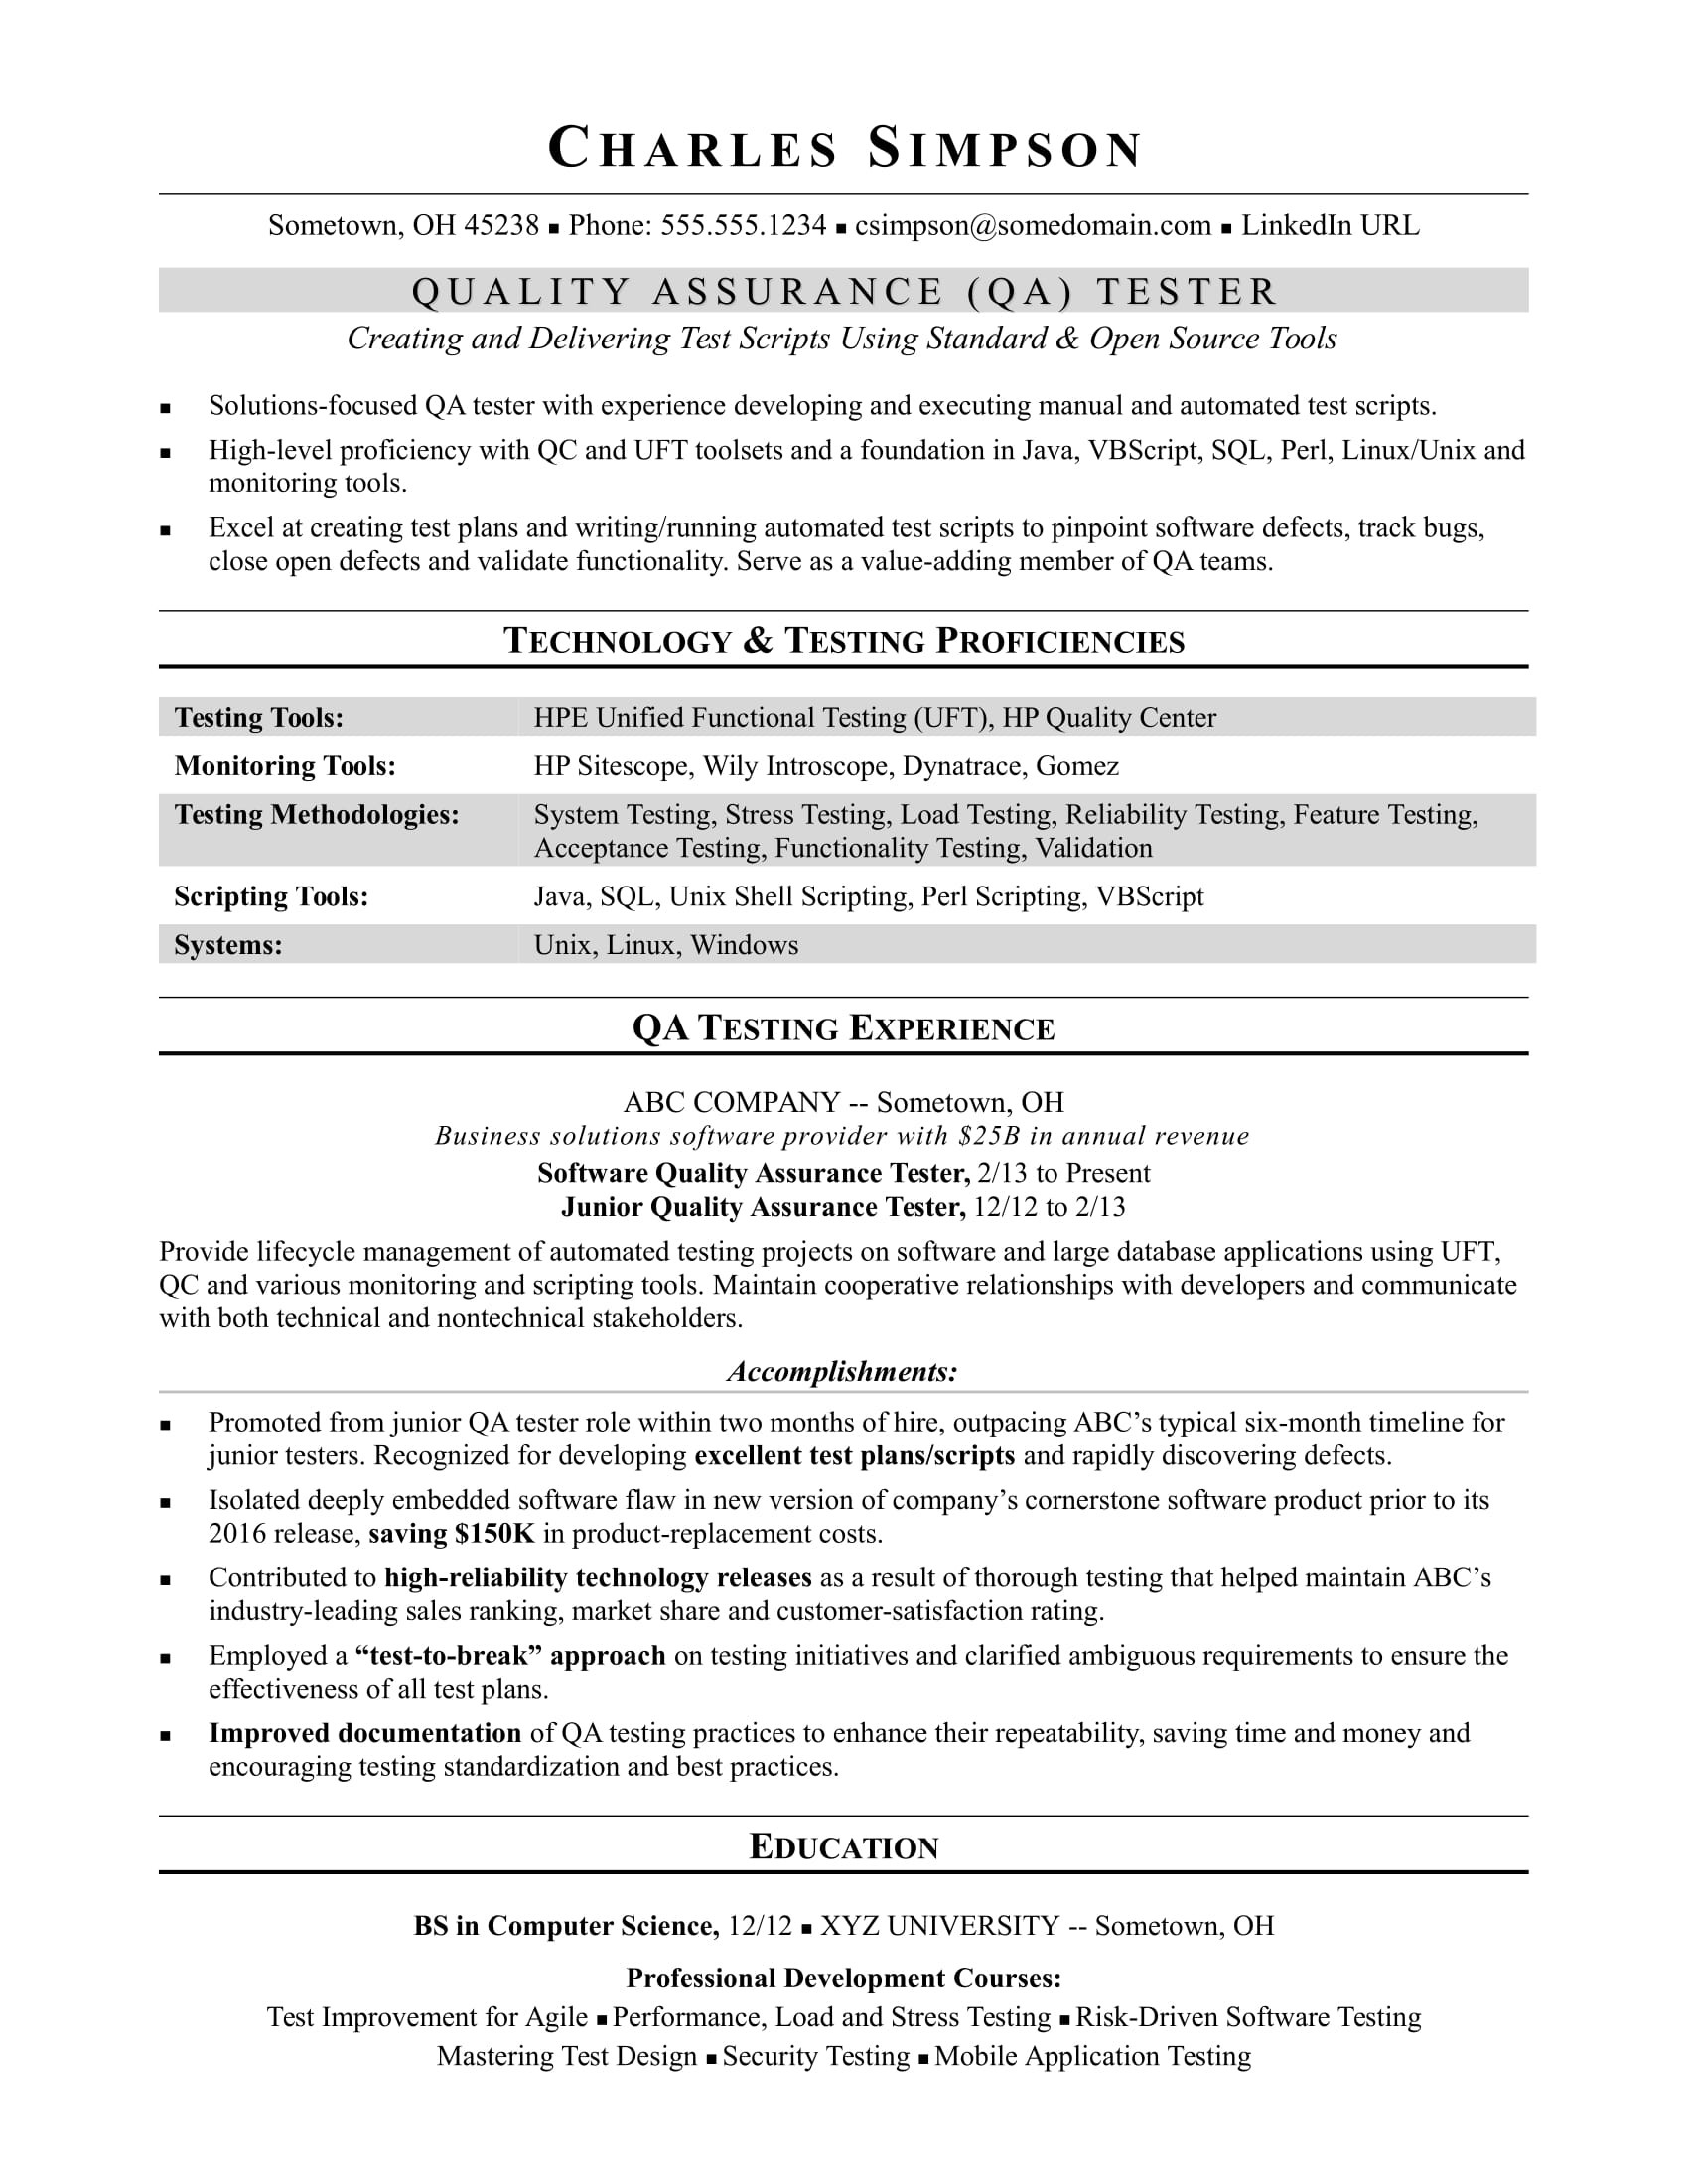 Sample Resume Headline for software Testing Sample Resume for A Midlevel Qa software Tester Monster.com